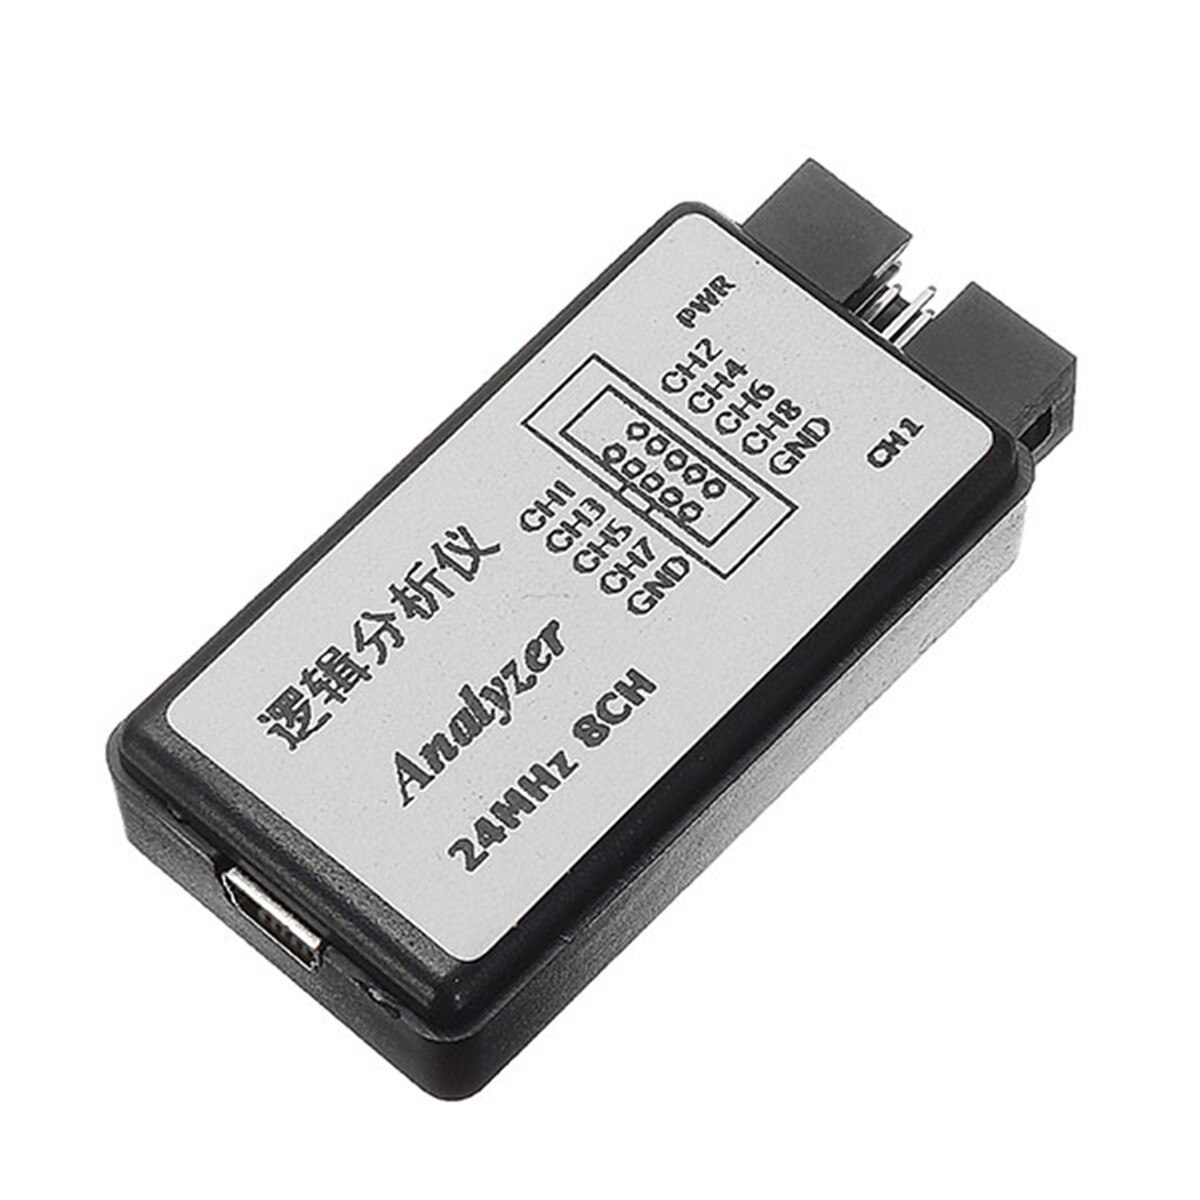 USB Logic Analyzer 24 M 8CH Microcontroller ARM FPGA Debug Tool 24 MHz, 16 MHz, 12 MHz, 8 MHz, 4 MHz, 2 MHz